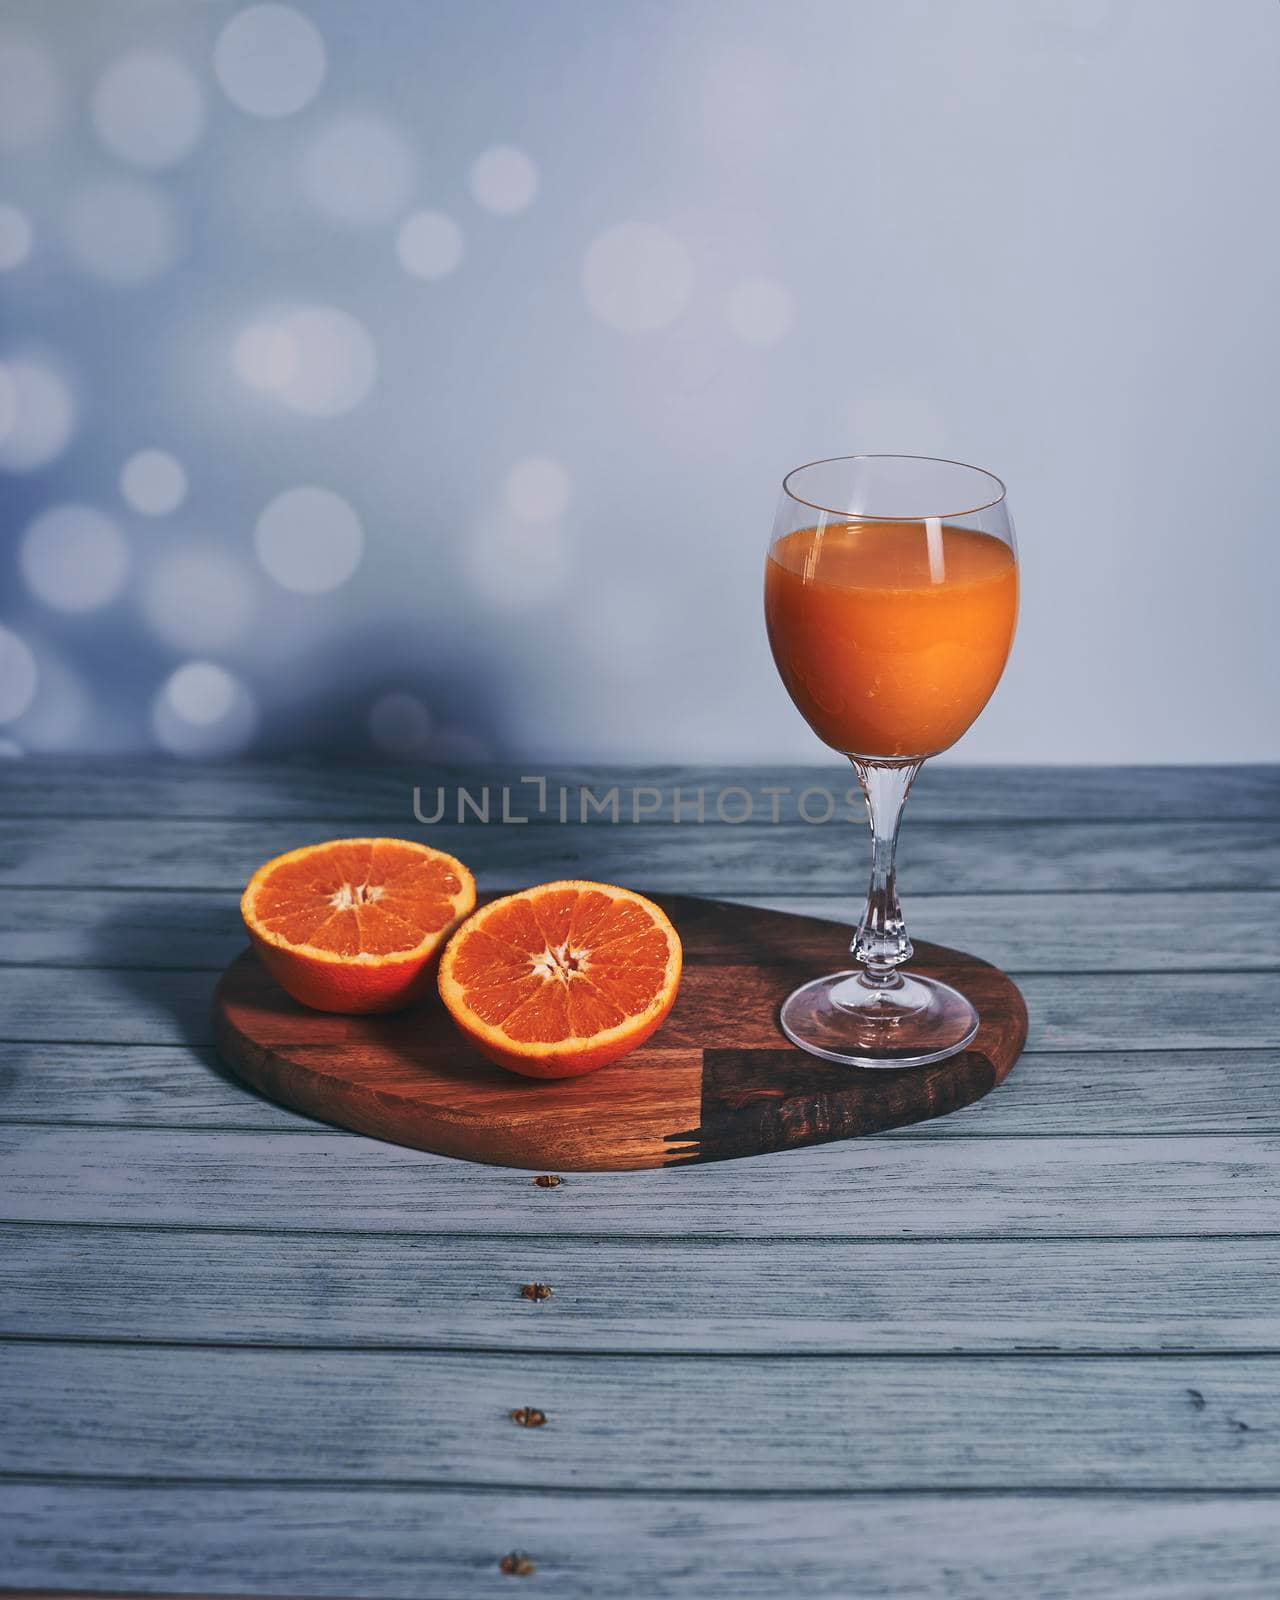 Glass of orange juice on wooden table, half orange, wooden floor, bright sound